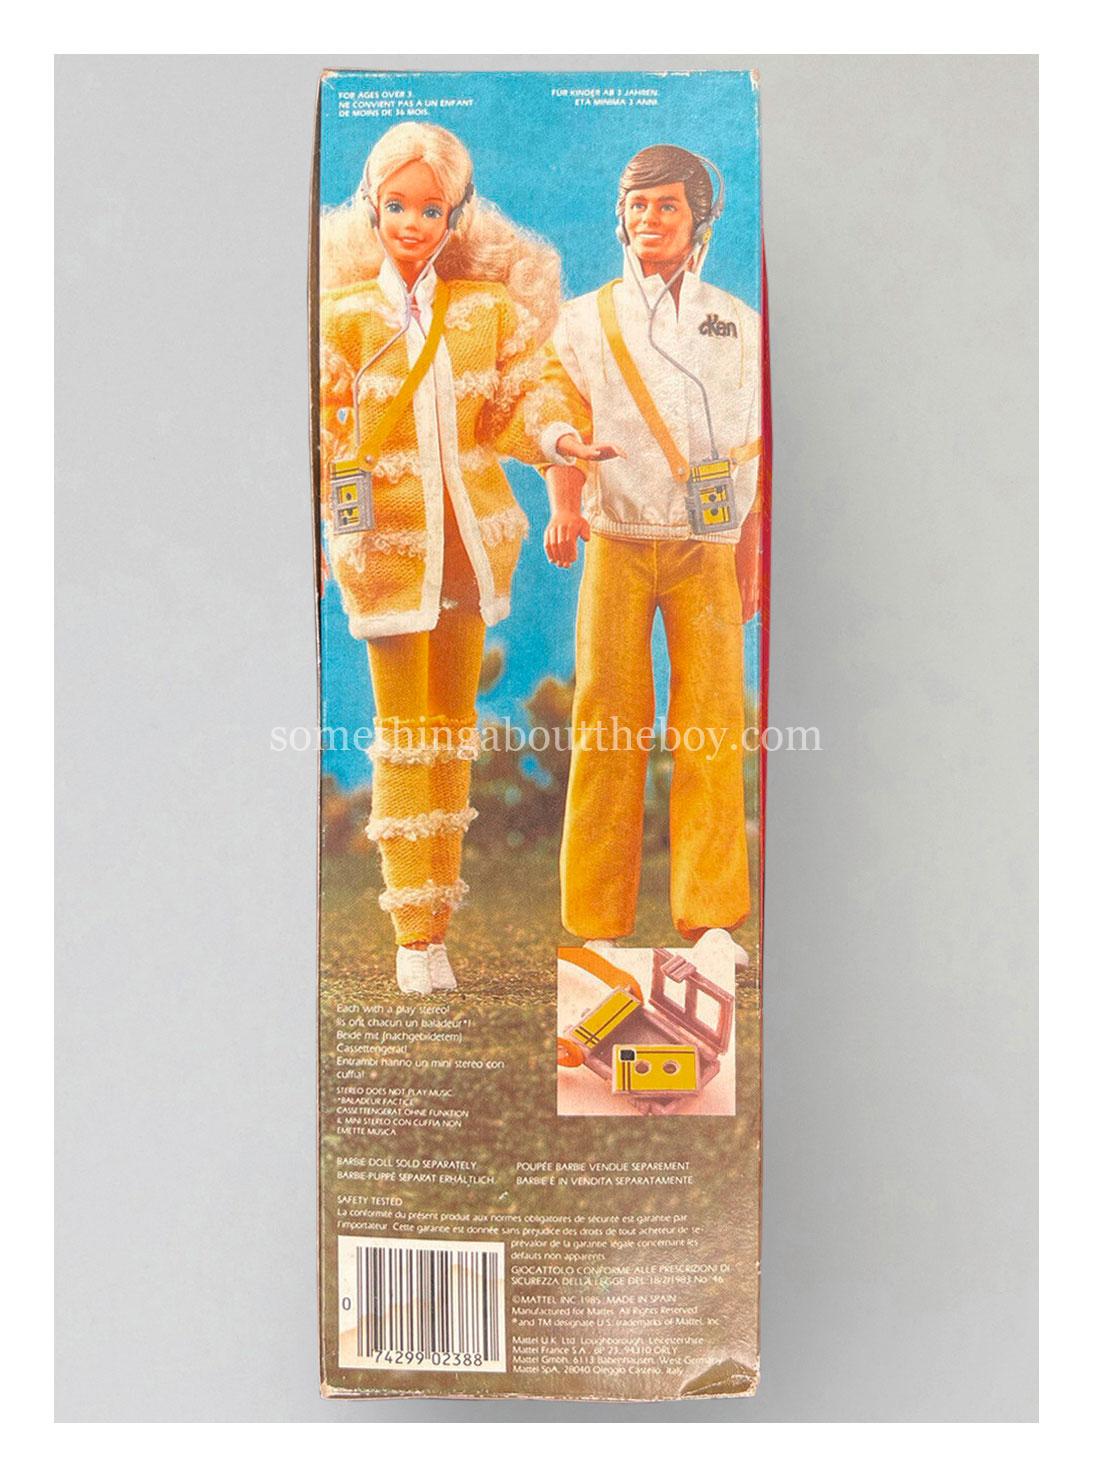 1986 #8283 Ken Super Tempo original packaging